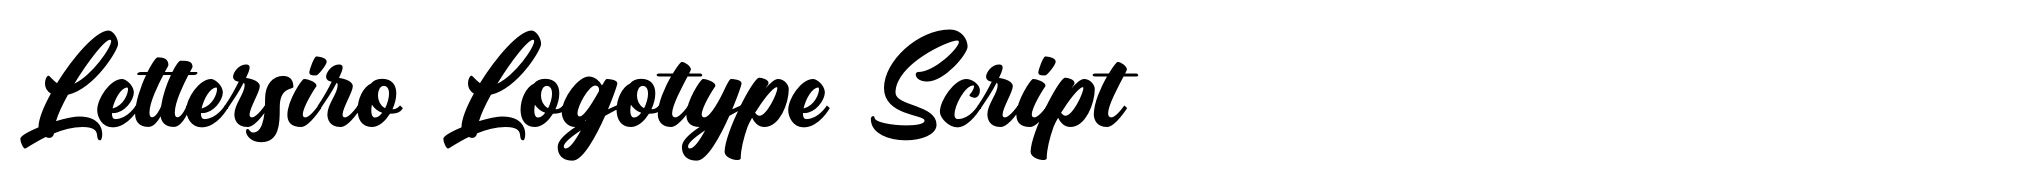 Lettersiro Logotype Script image